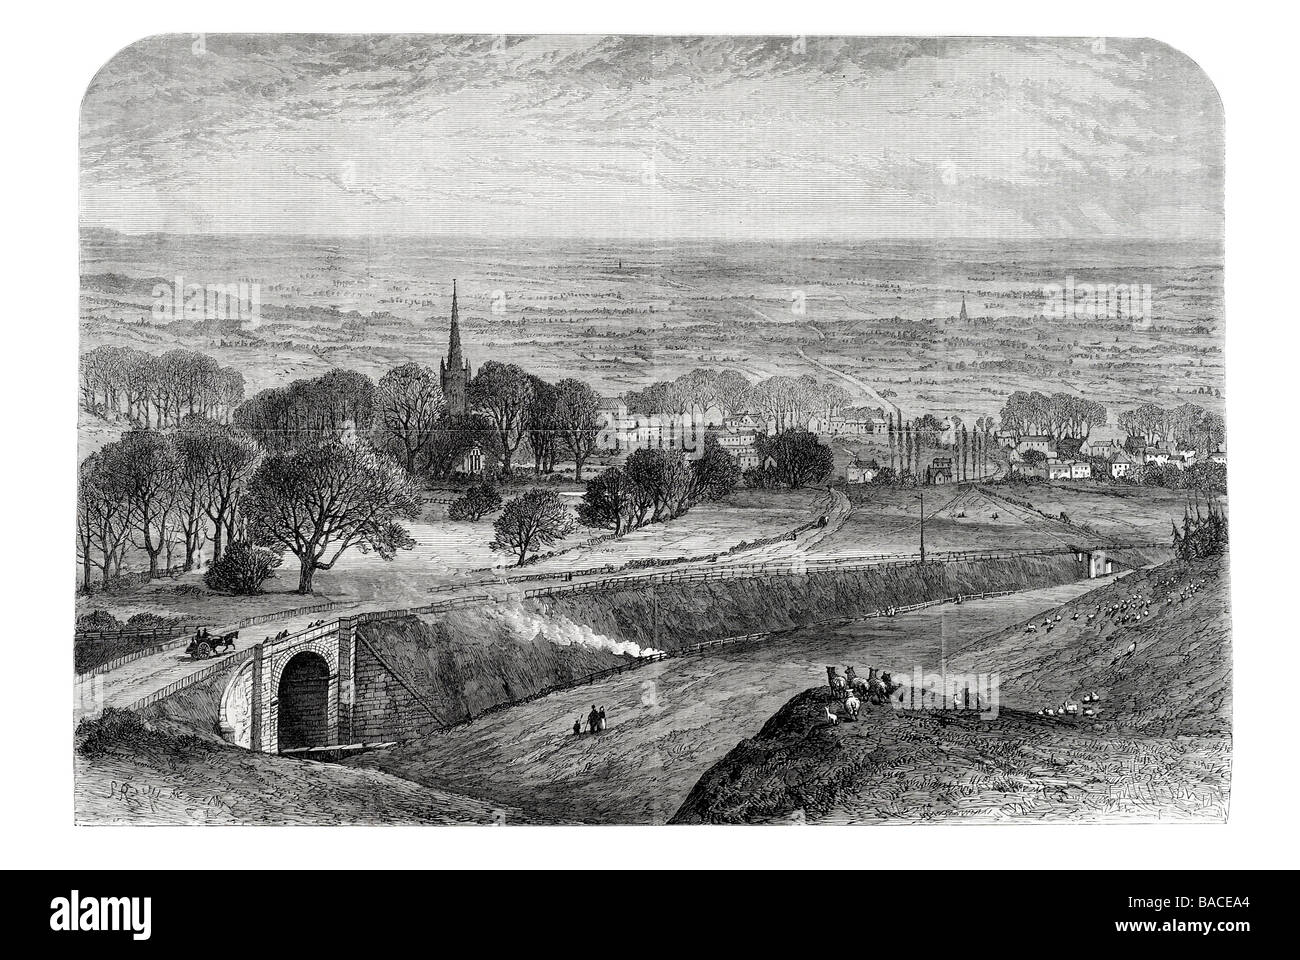 leadenham on the lincoln and honington railway Kesteven 1867 Stock Photo